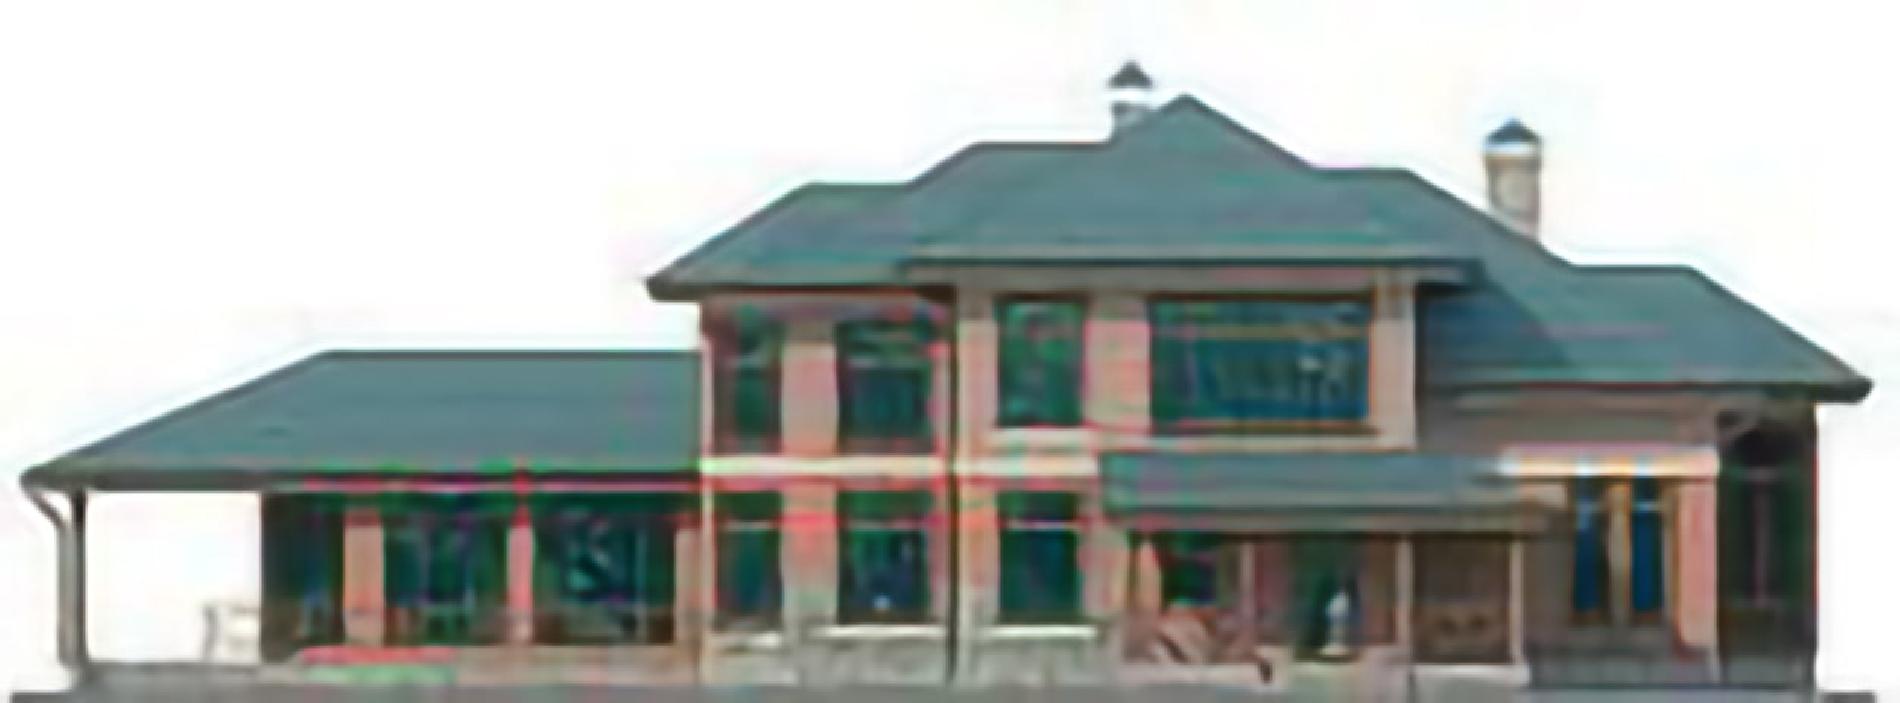 Фасады проекта дома №37-20 37-20_f1-min.jpg